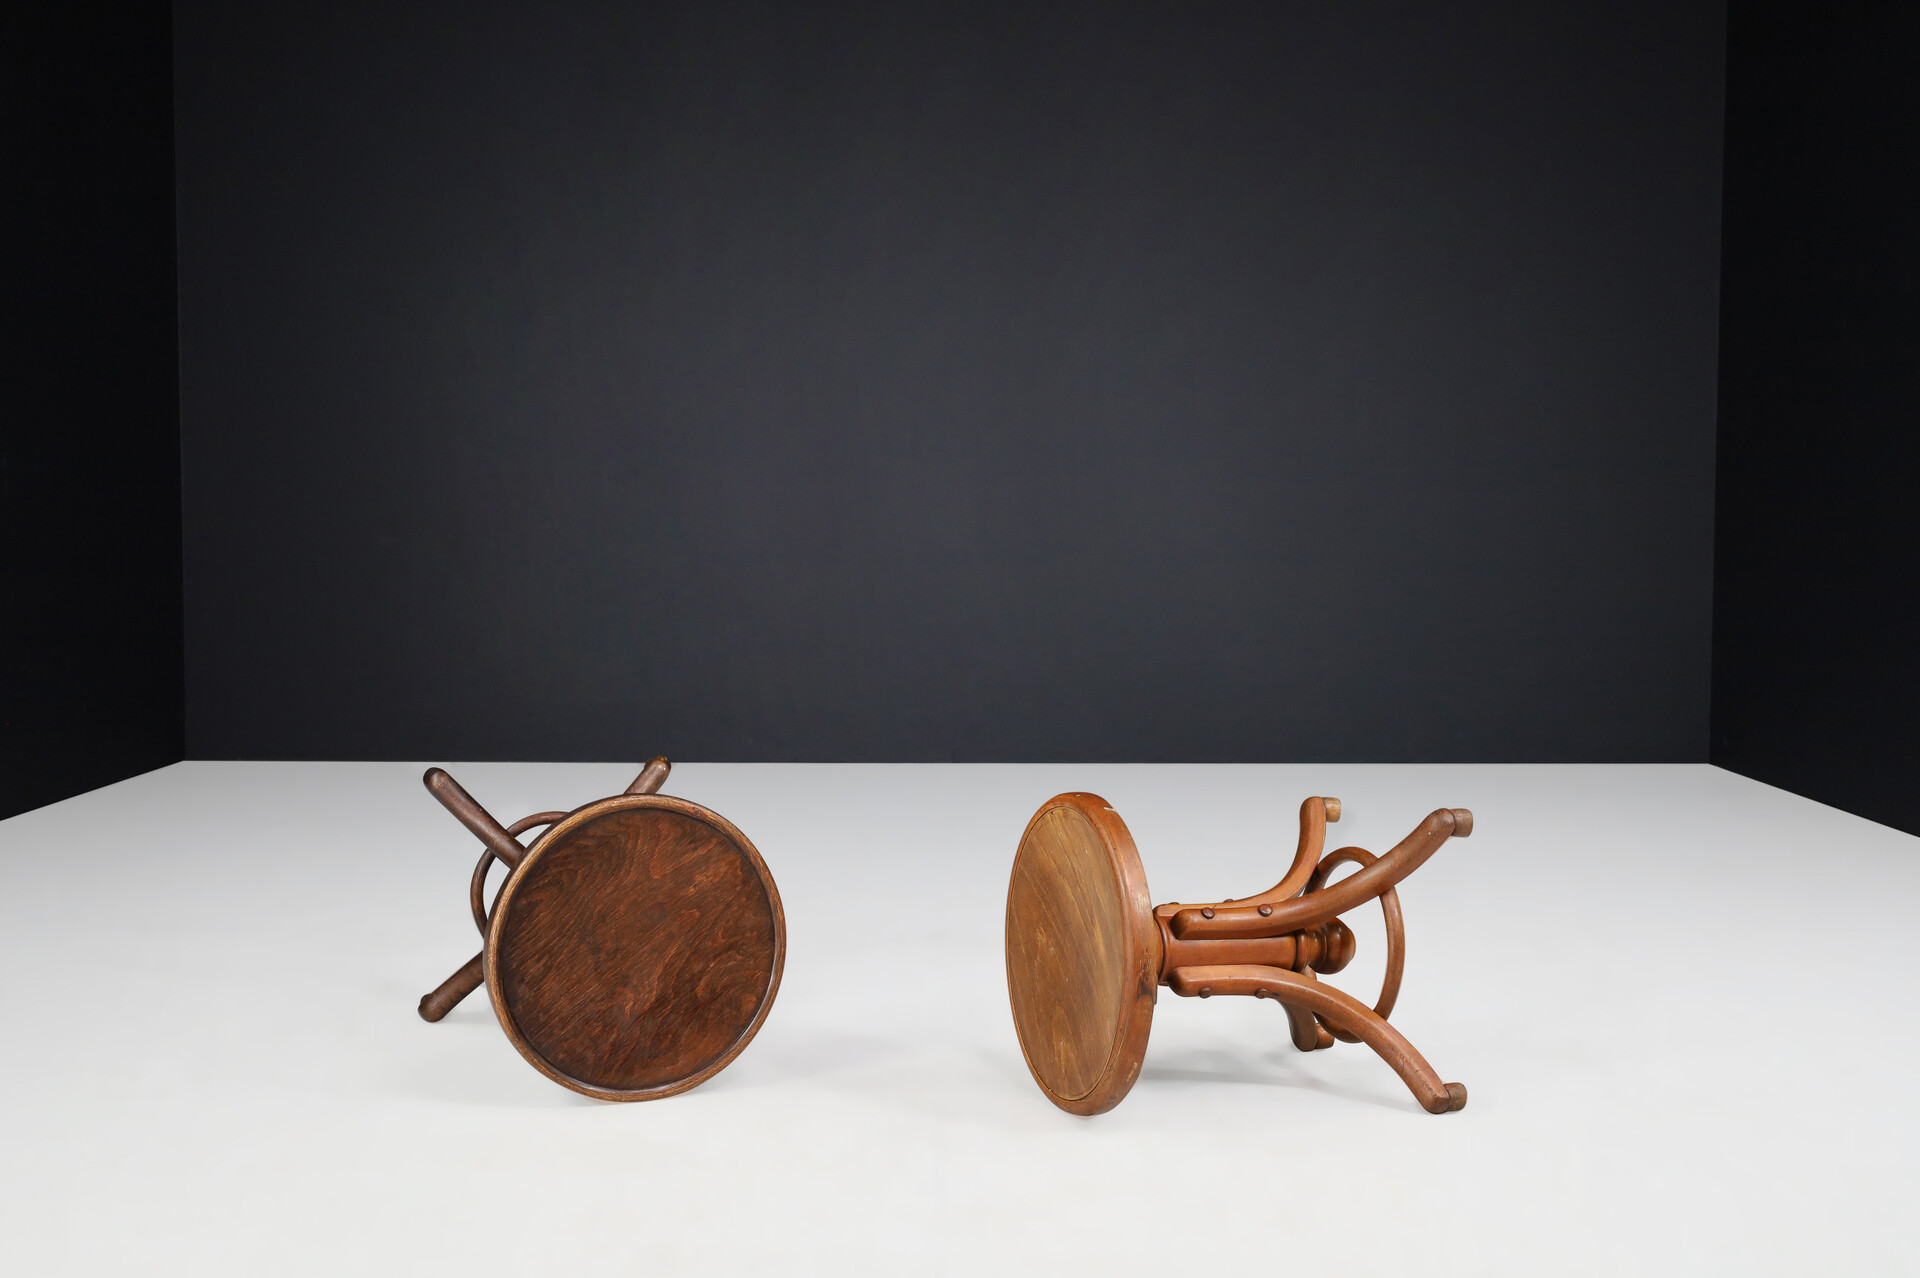 Antique Adjustable tabouret stools by Thonet, Austria 1910 20th century